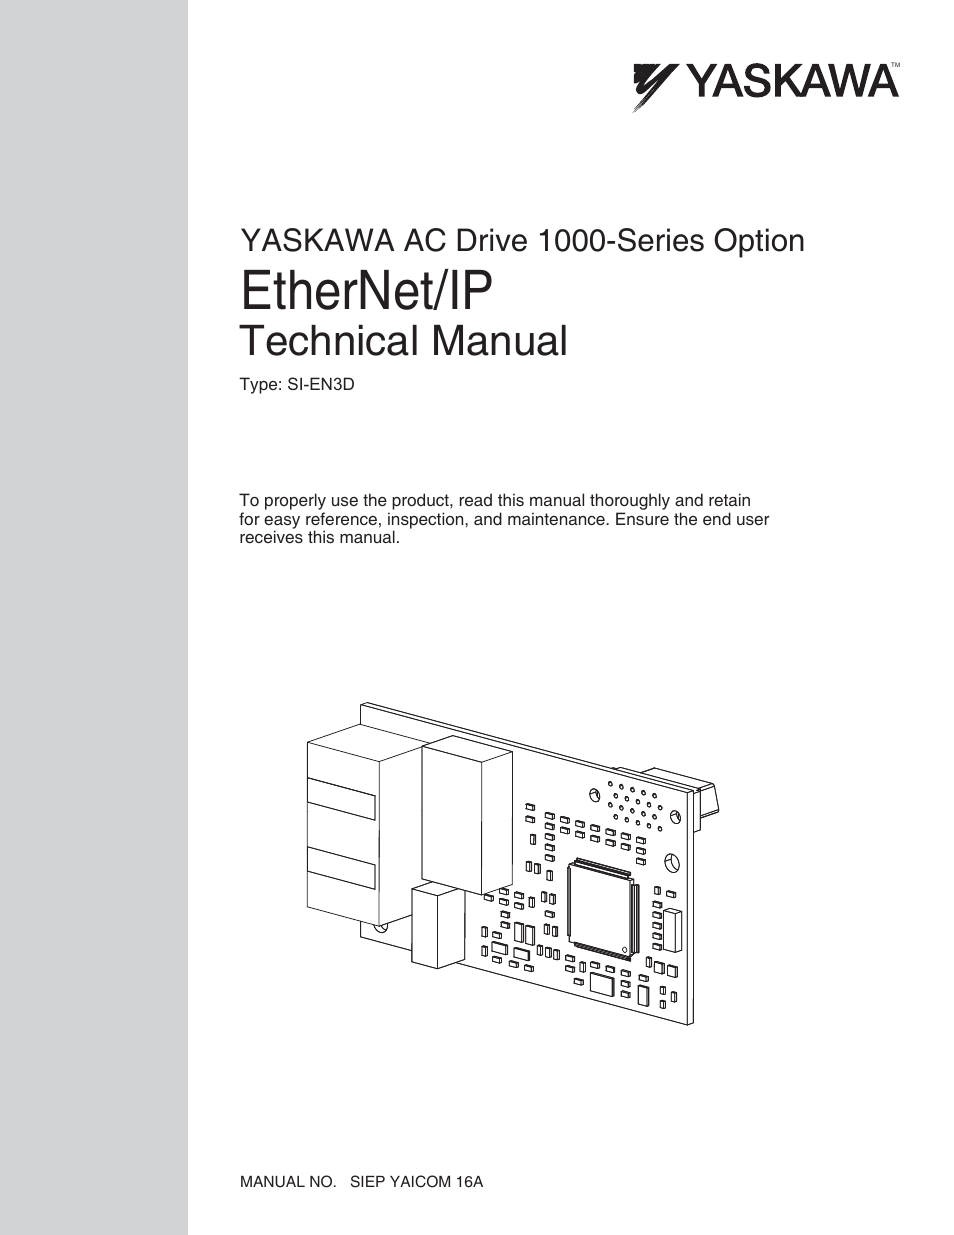 1000 Series Option Dual Port EtherNet/IP SI-EN3D Technical Manual